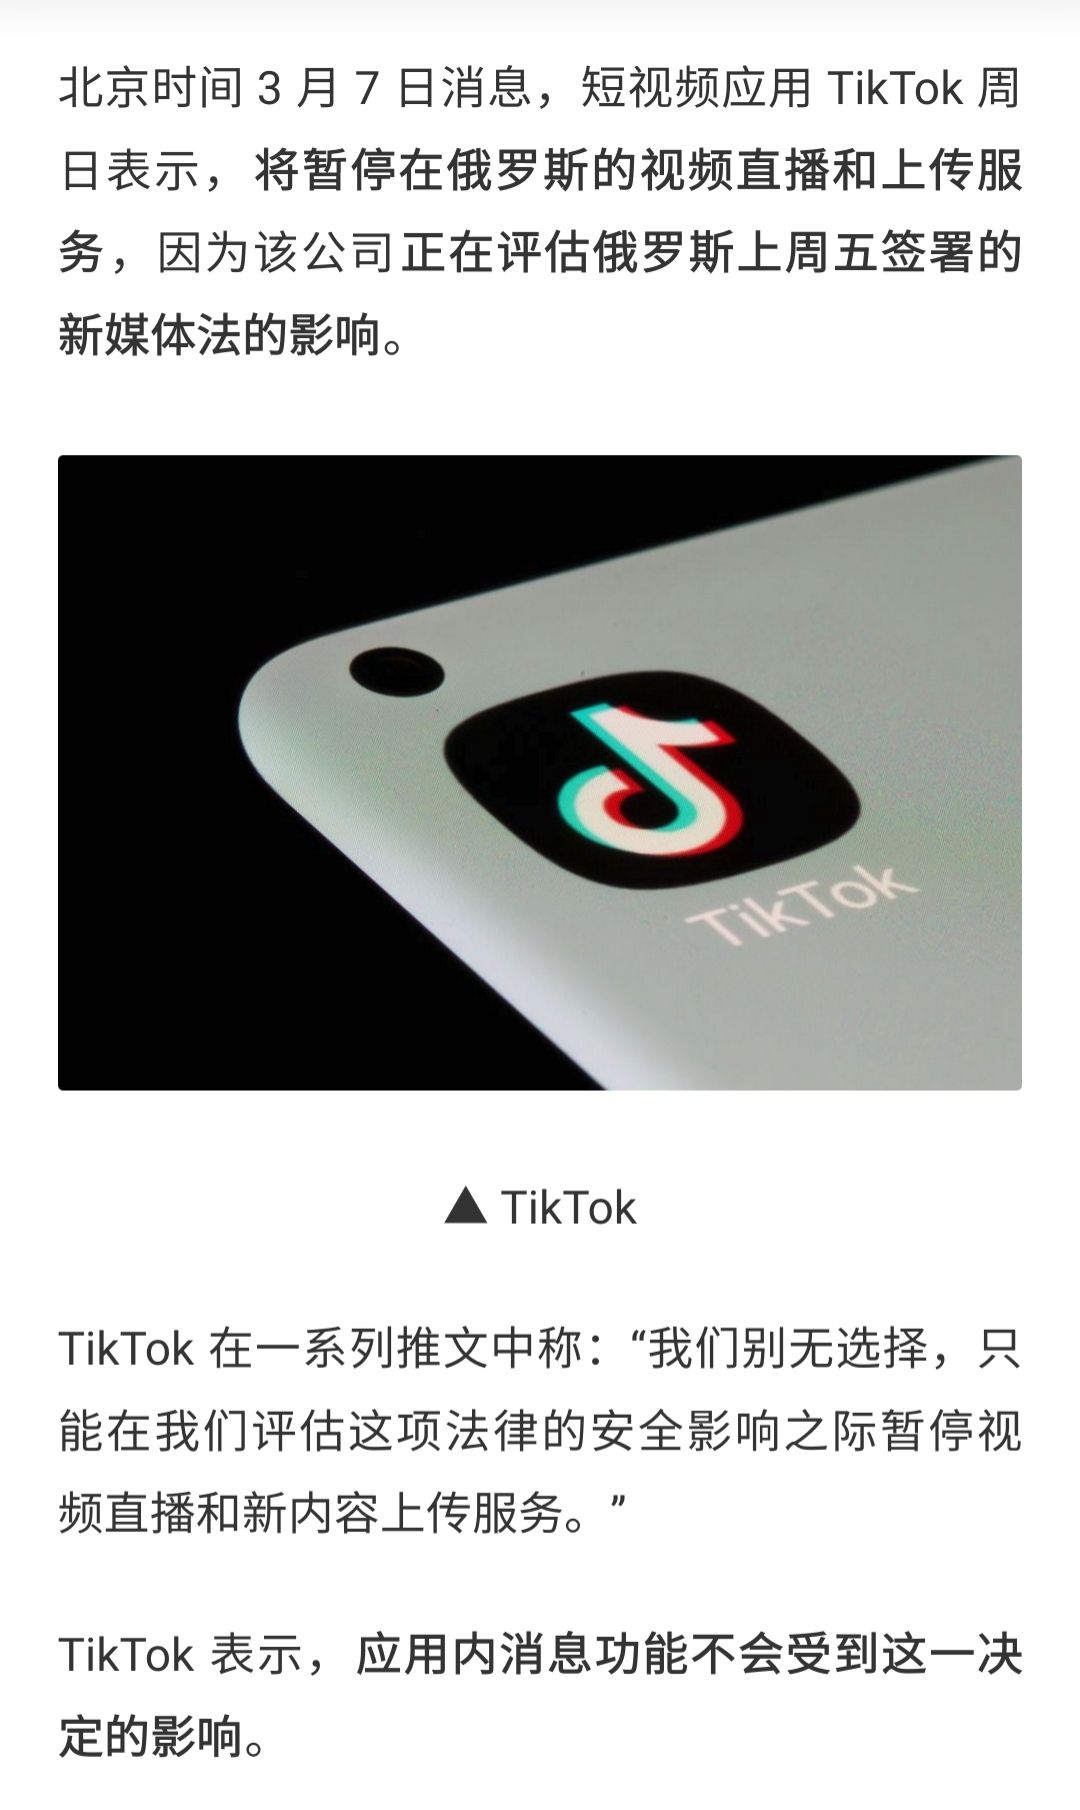 TikTok 暂停在俄罗斯的视频直播和上传 tiktok,暂停,俄罗斯,视频,视频直播